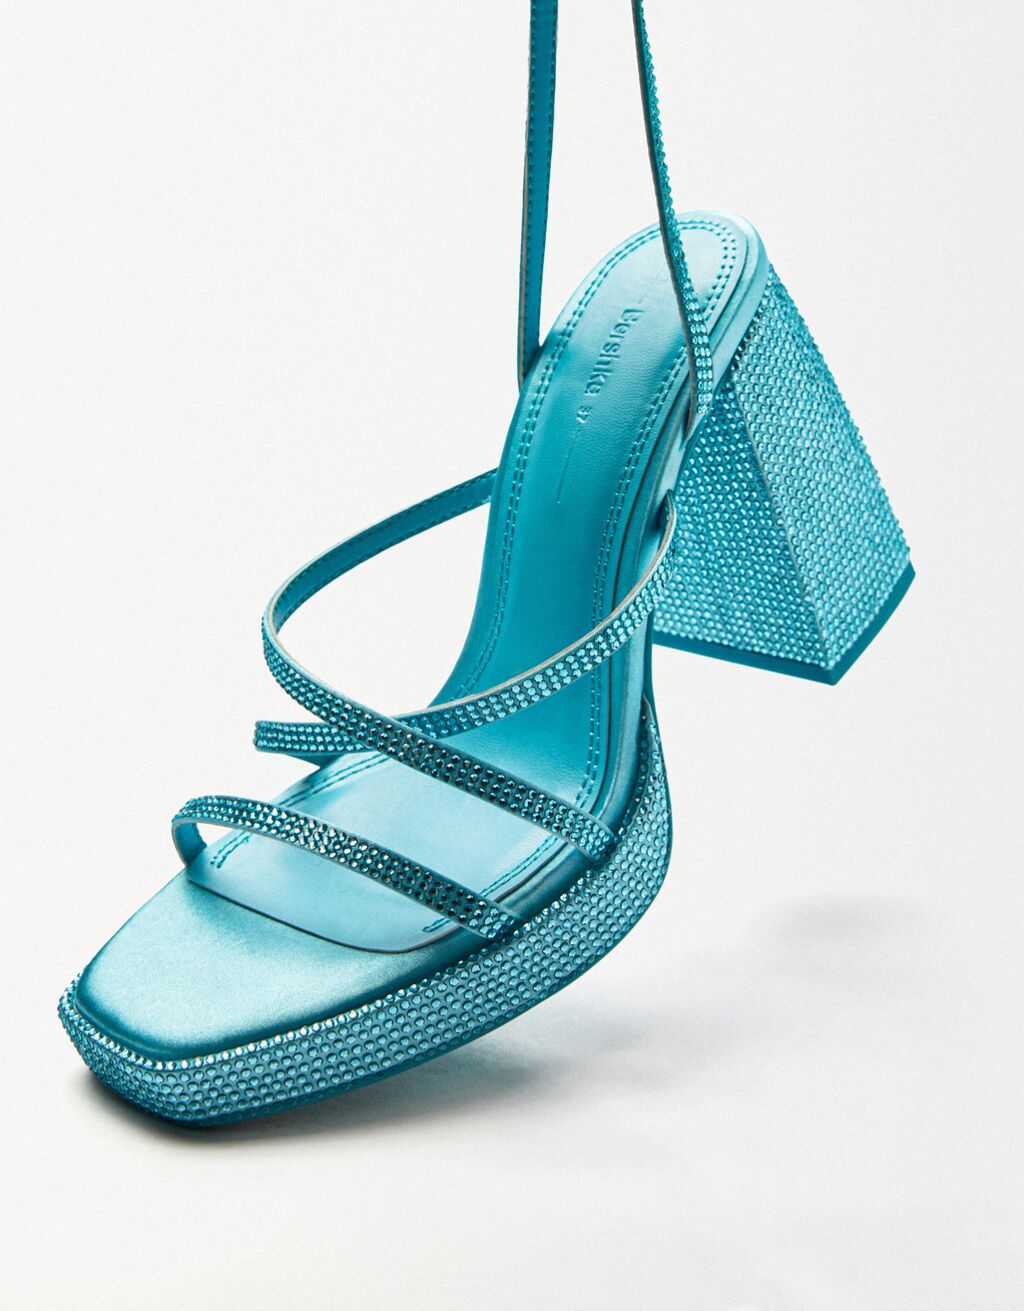 High-heel platform sandals with gems